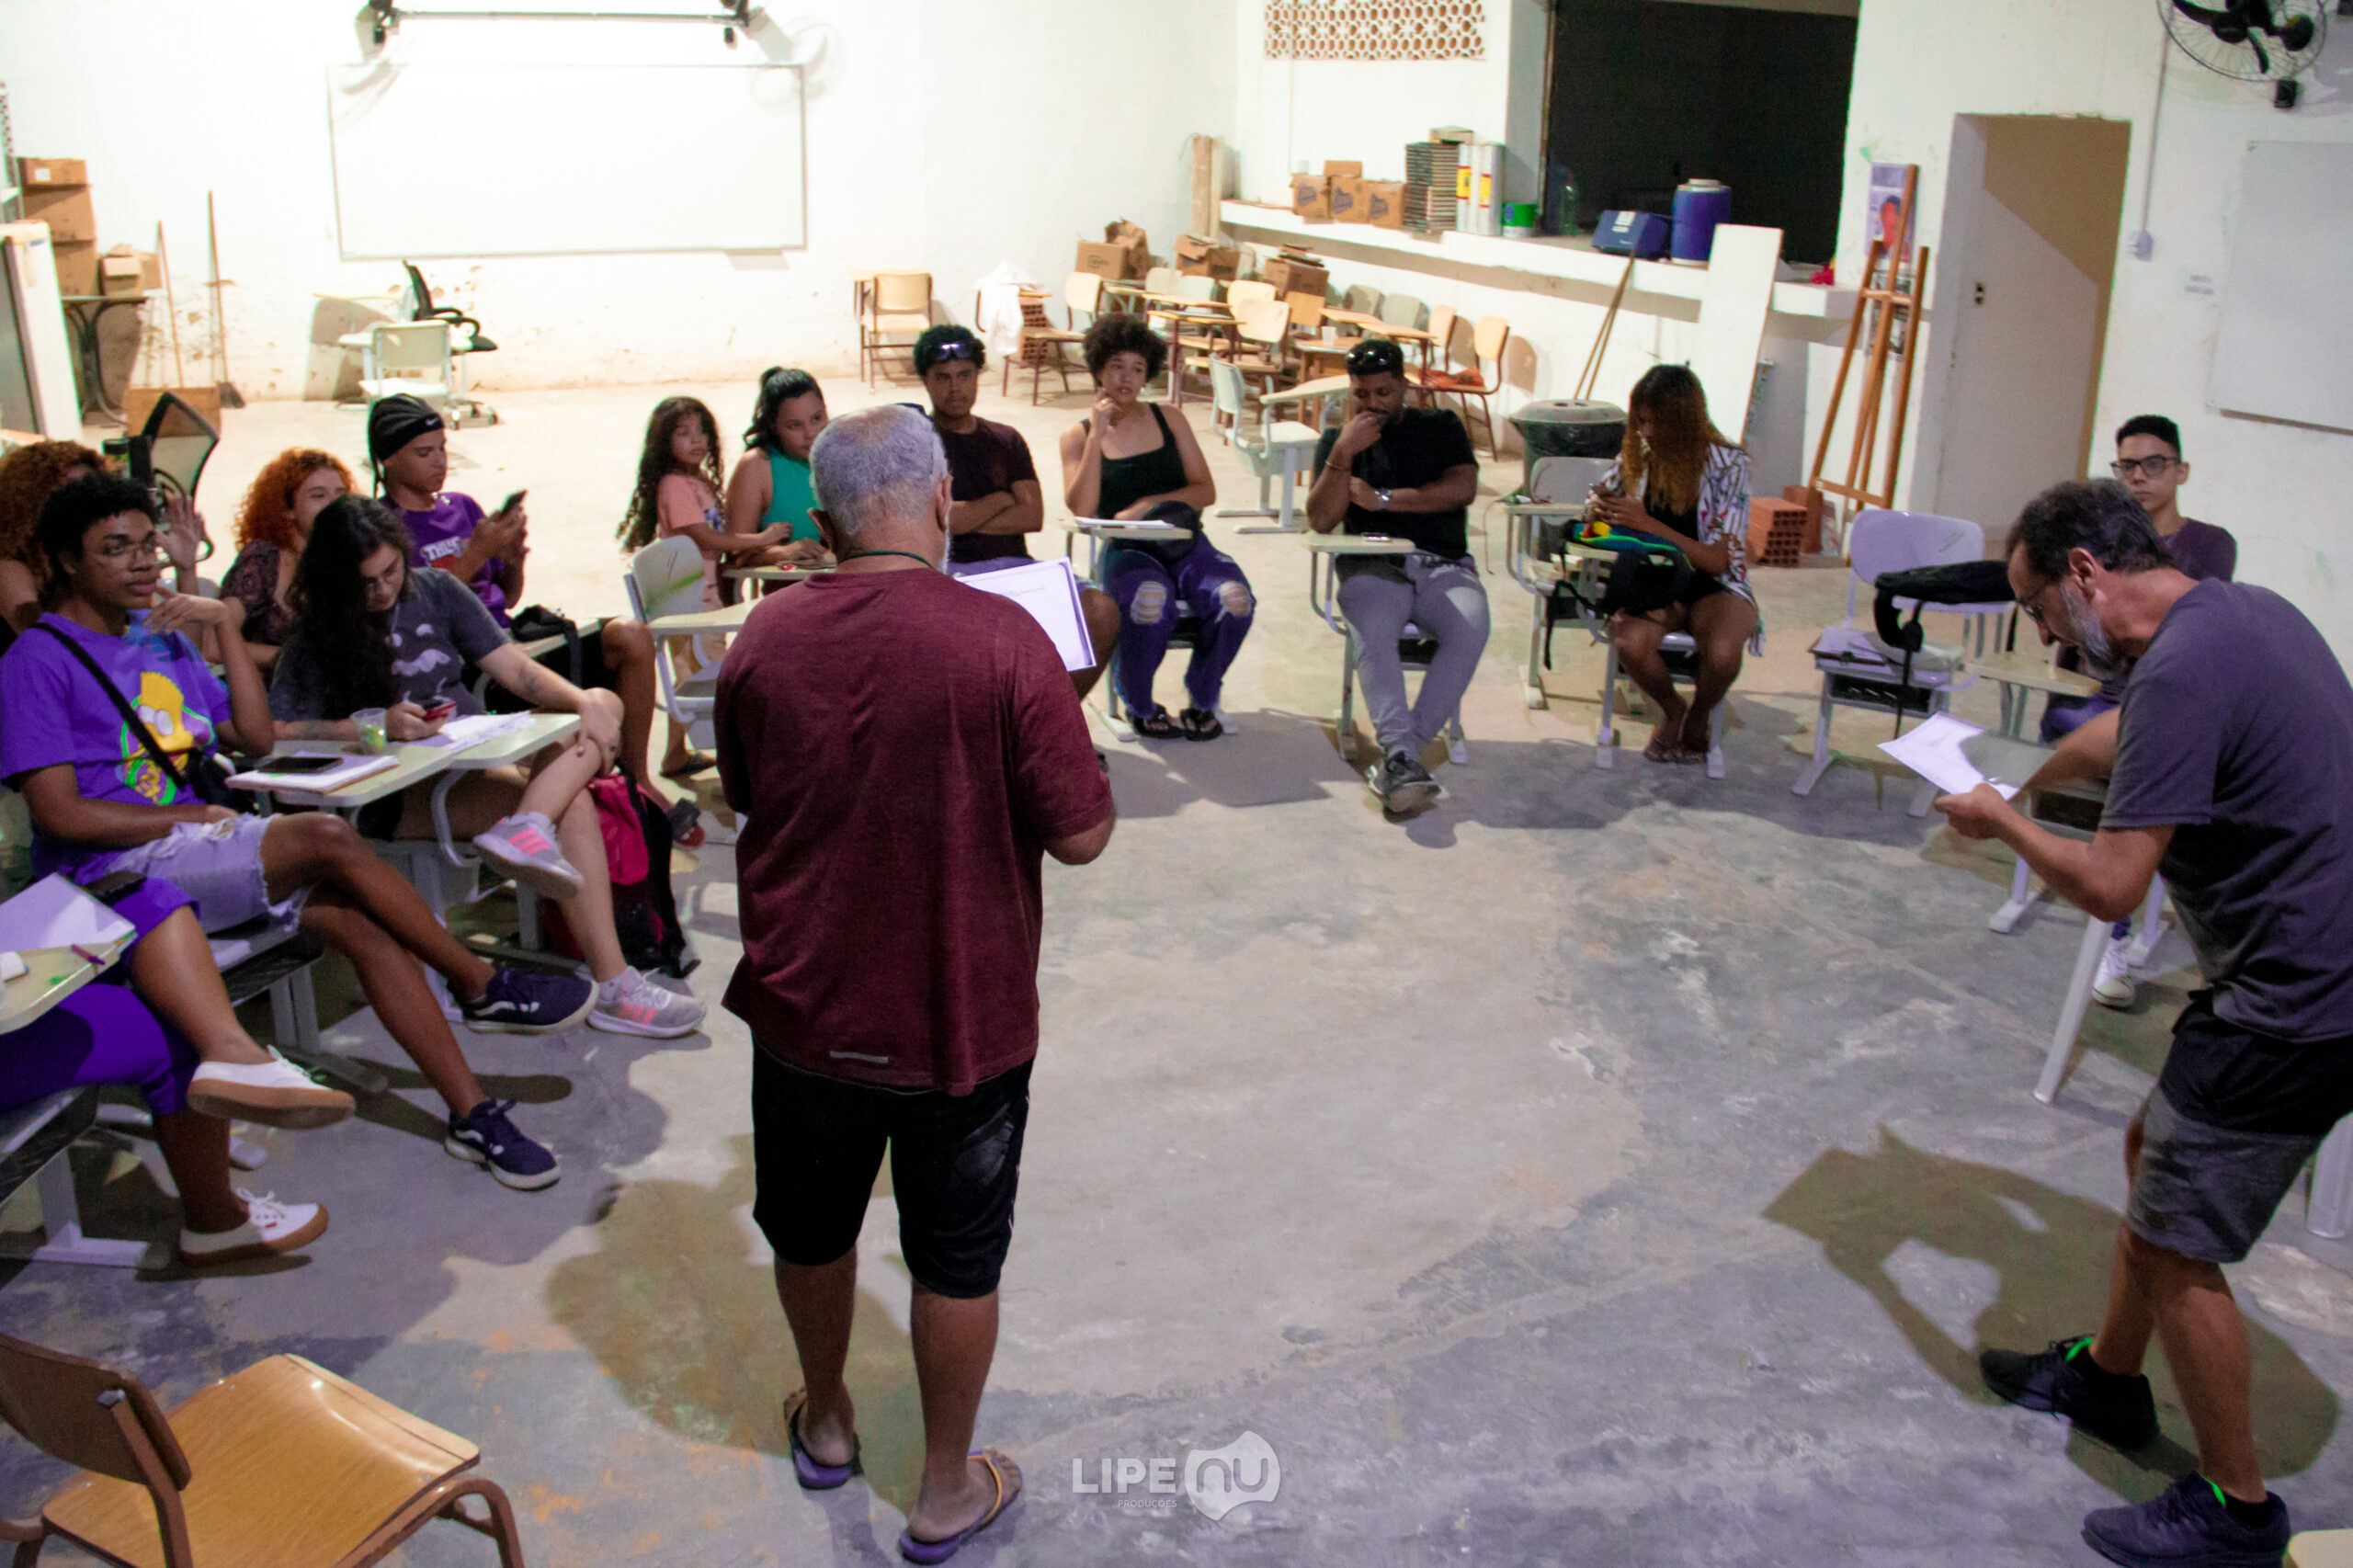 Deley de Acari reciting and battling with poet and mentor Jair Dias at CineSarau Nzinga de Angola in the Acari favela in Rio's North Zone on June 24, 2023. Photo: Felipe Nunes